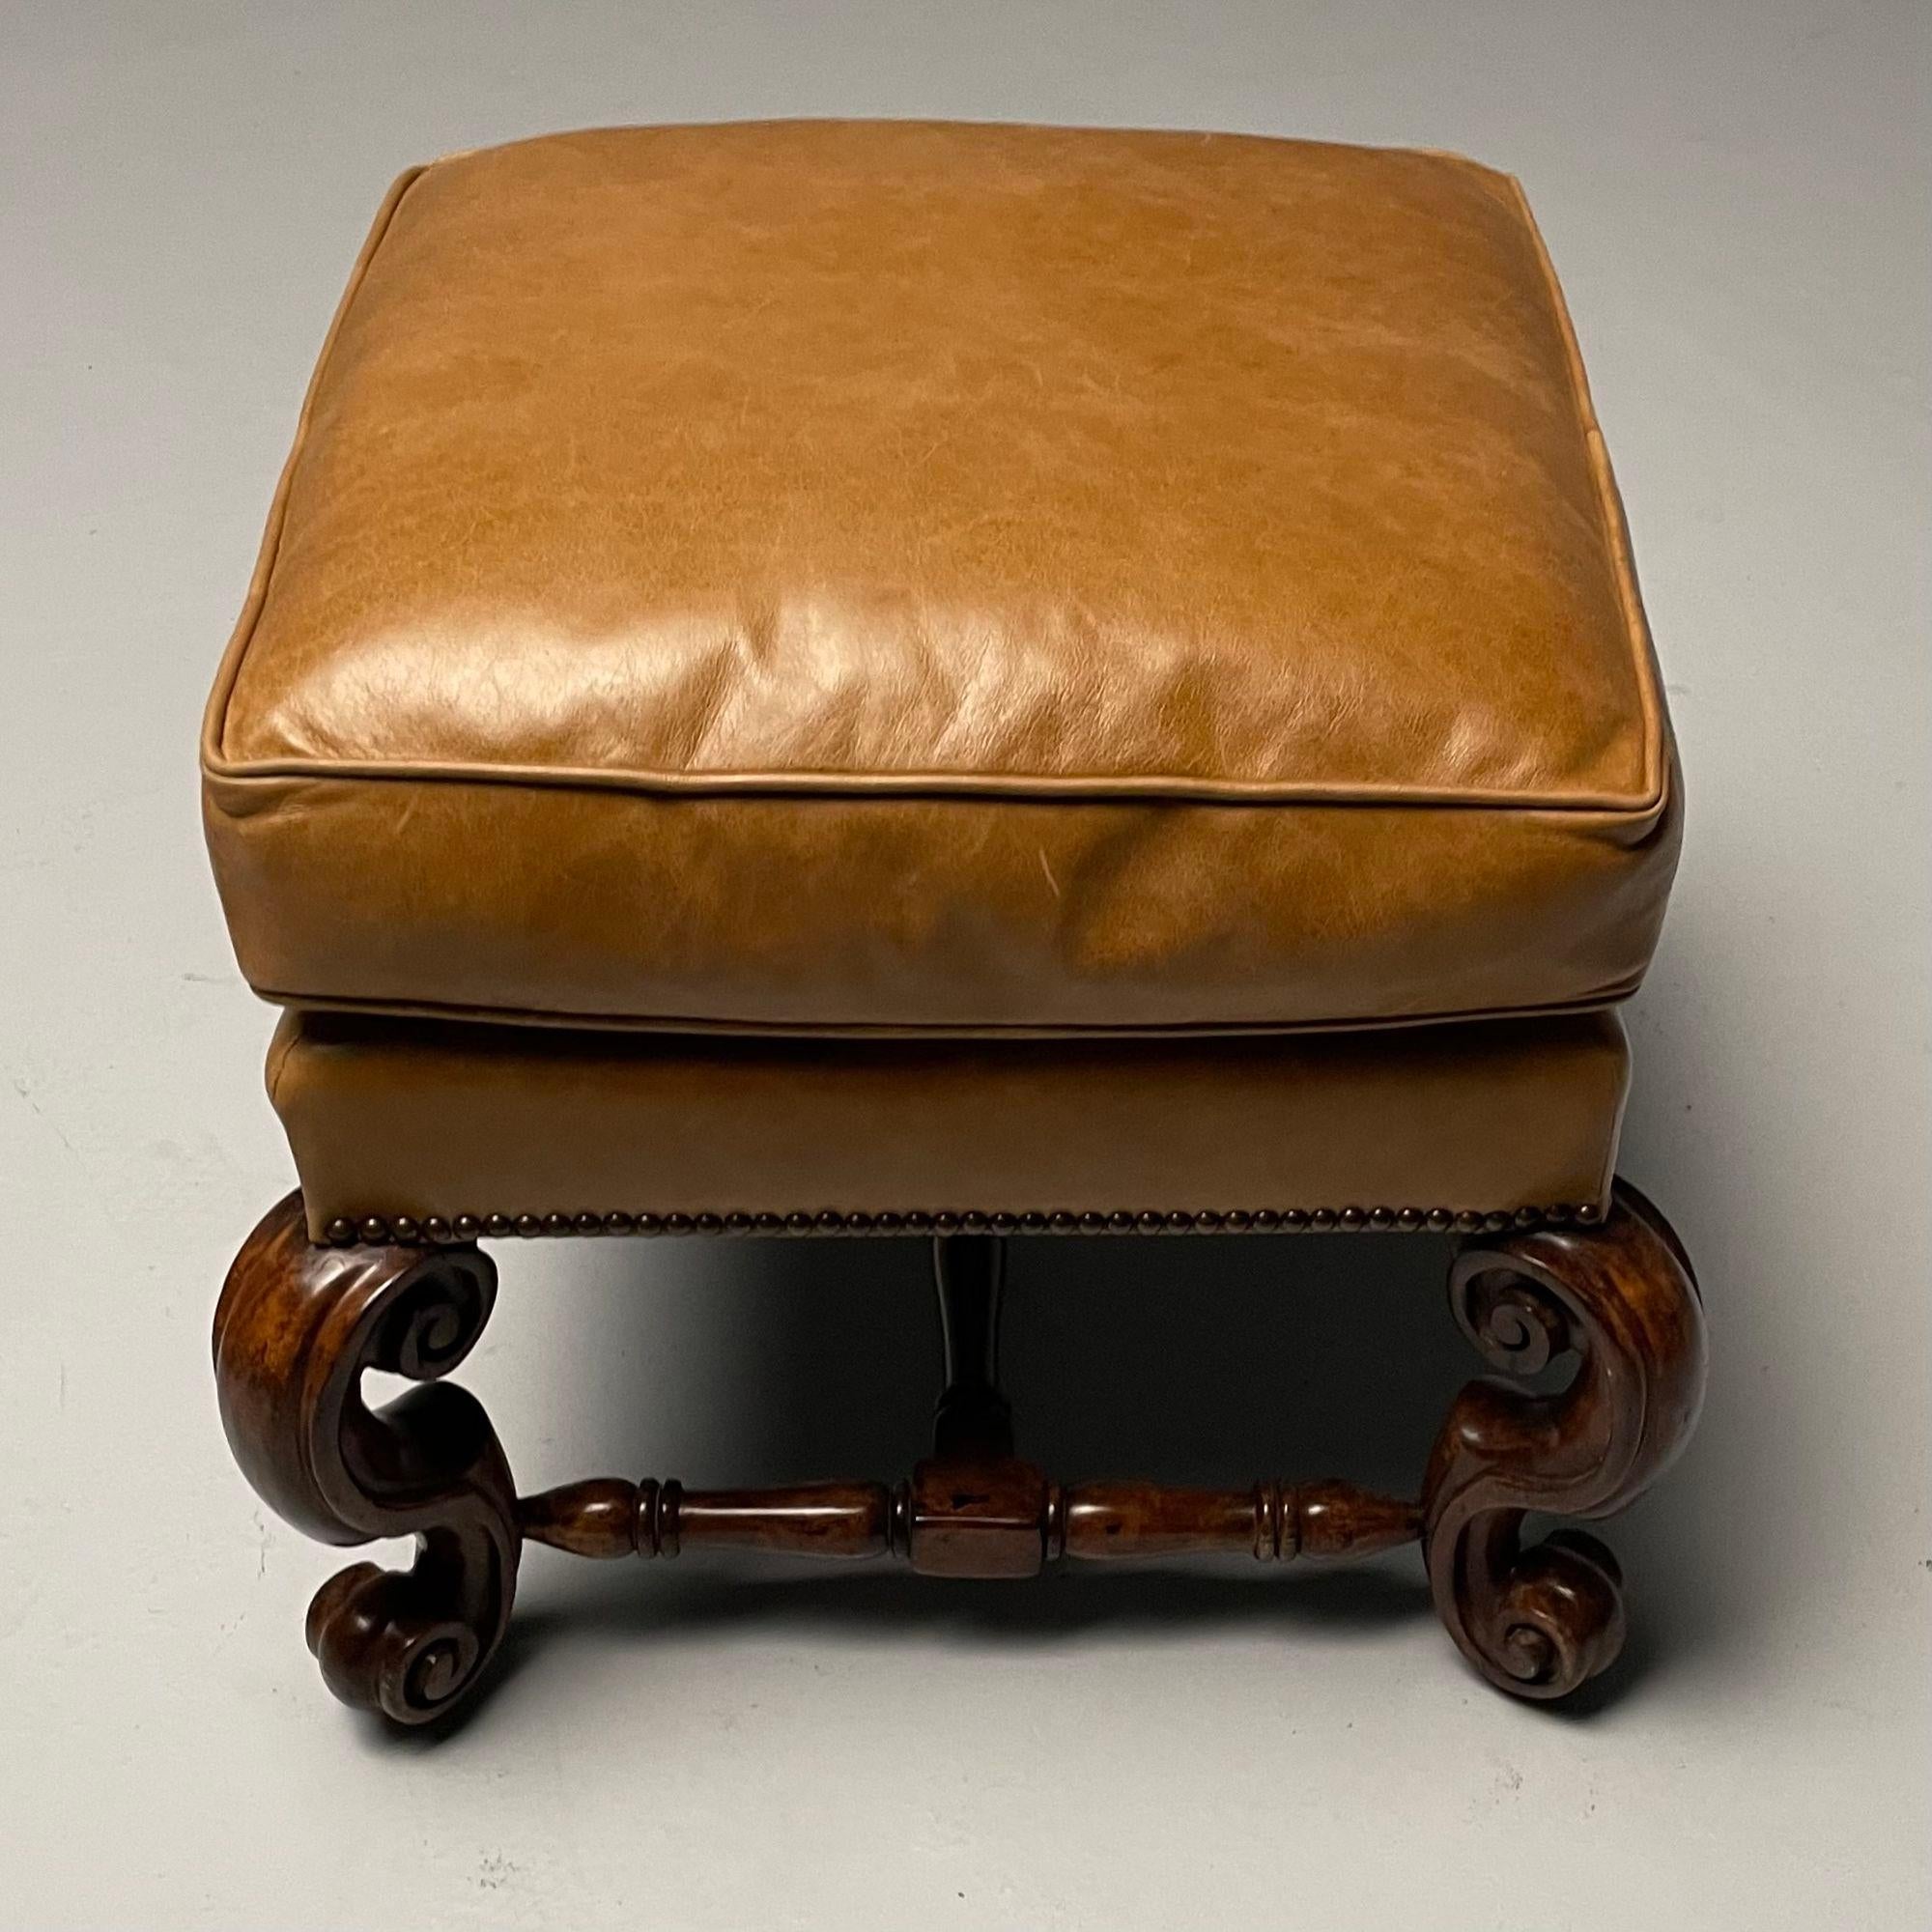 Georgian, Cabriole Leg Ottomans, Tan Leather, Wood, USA, 2000s For Sale 2